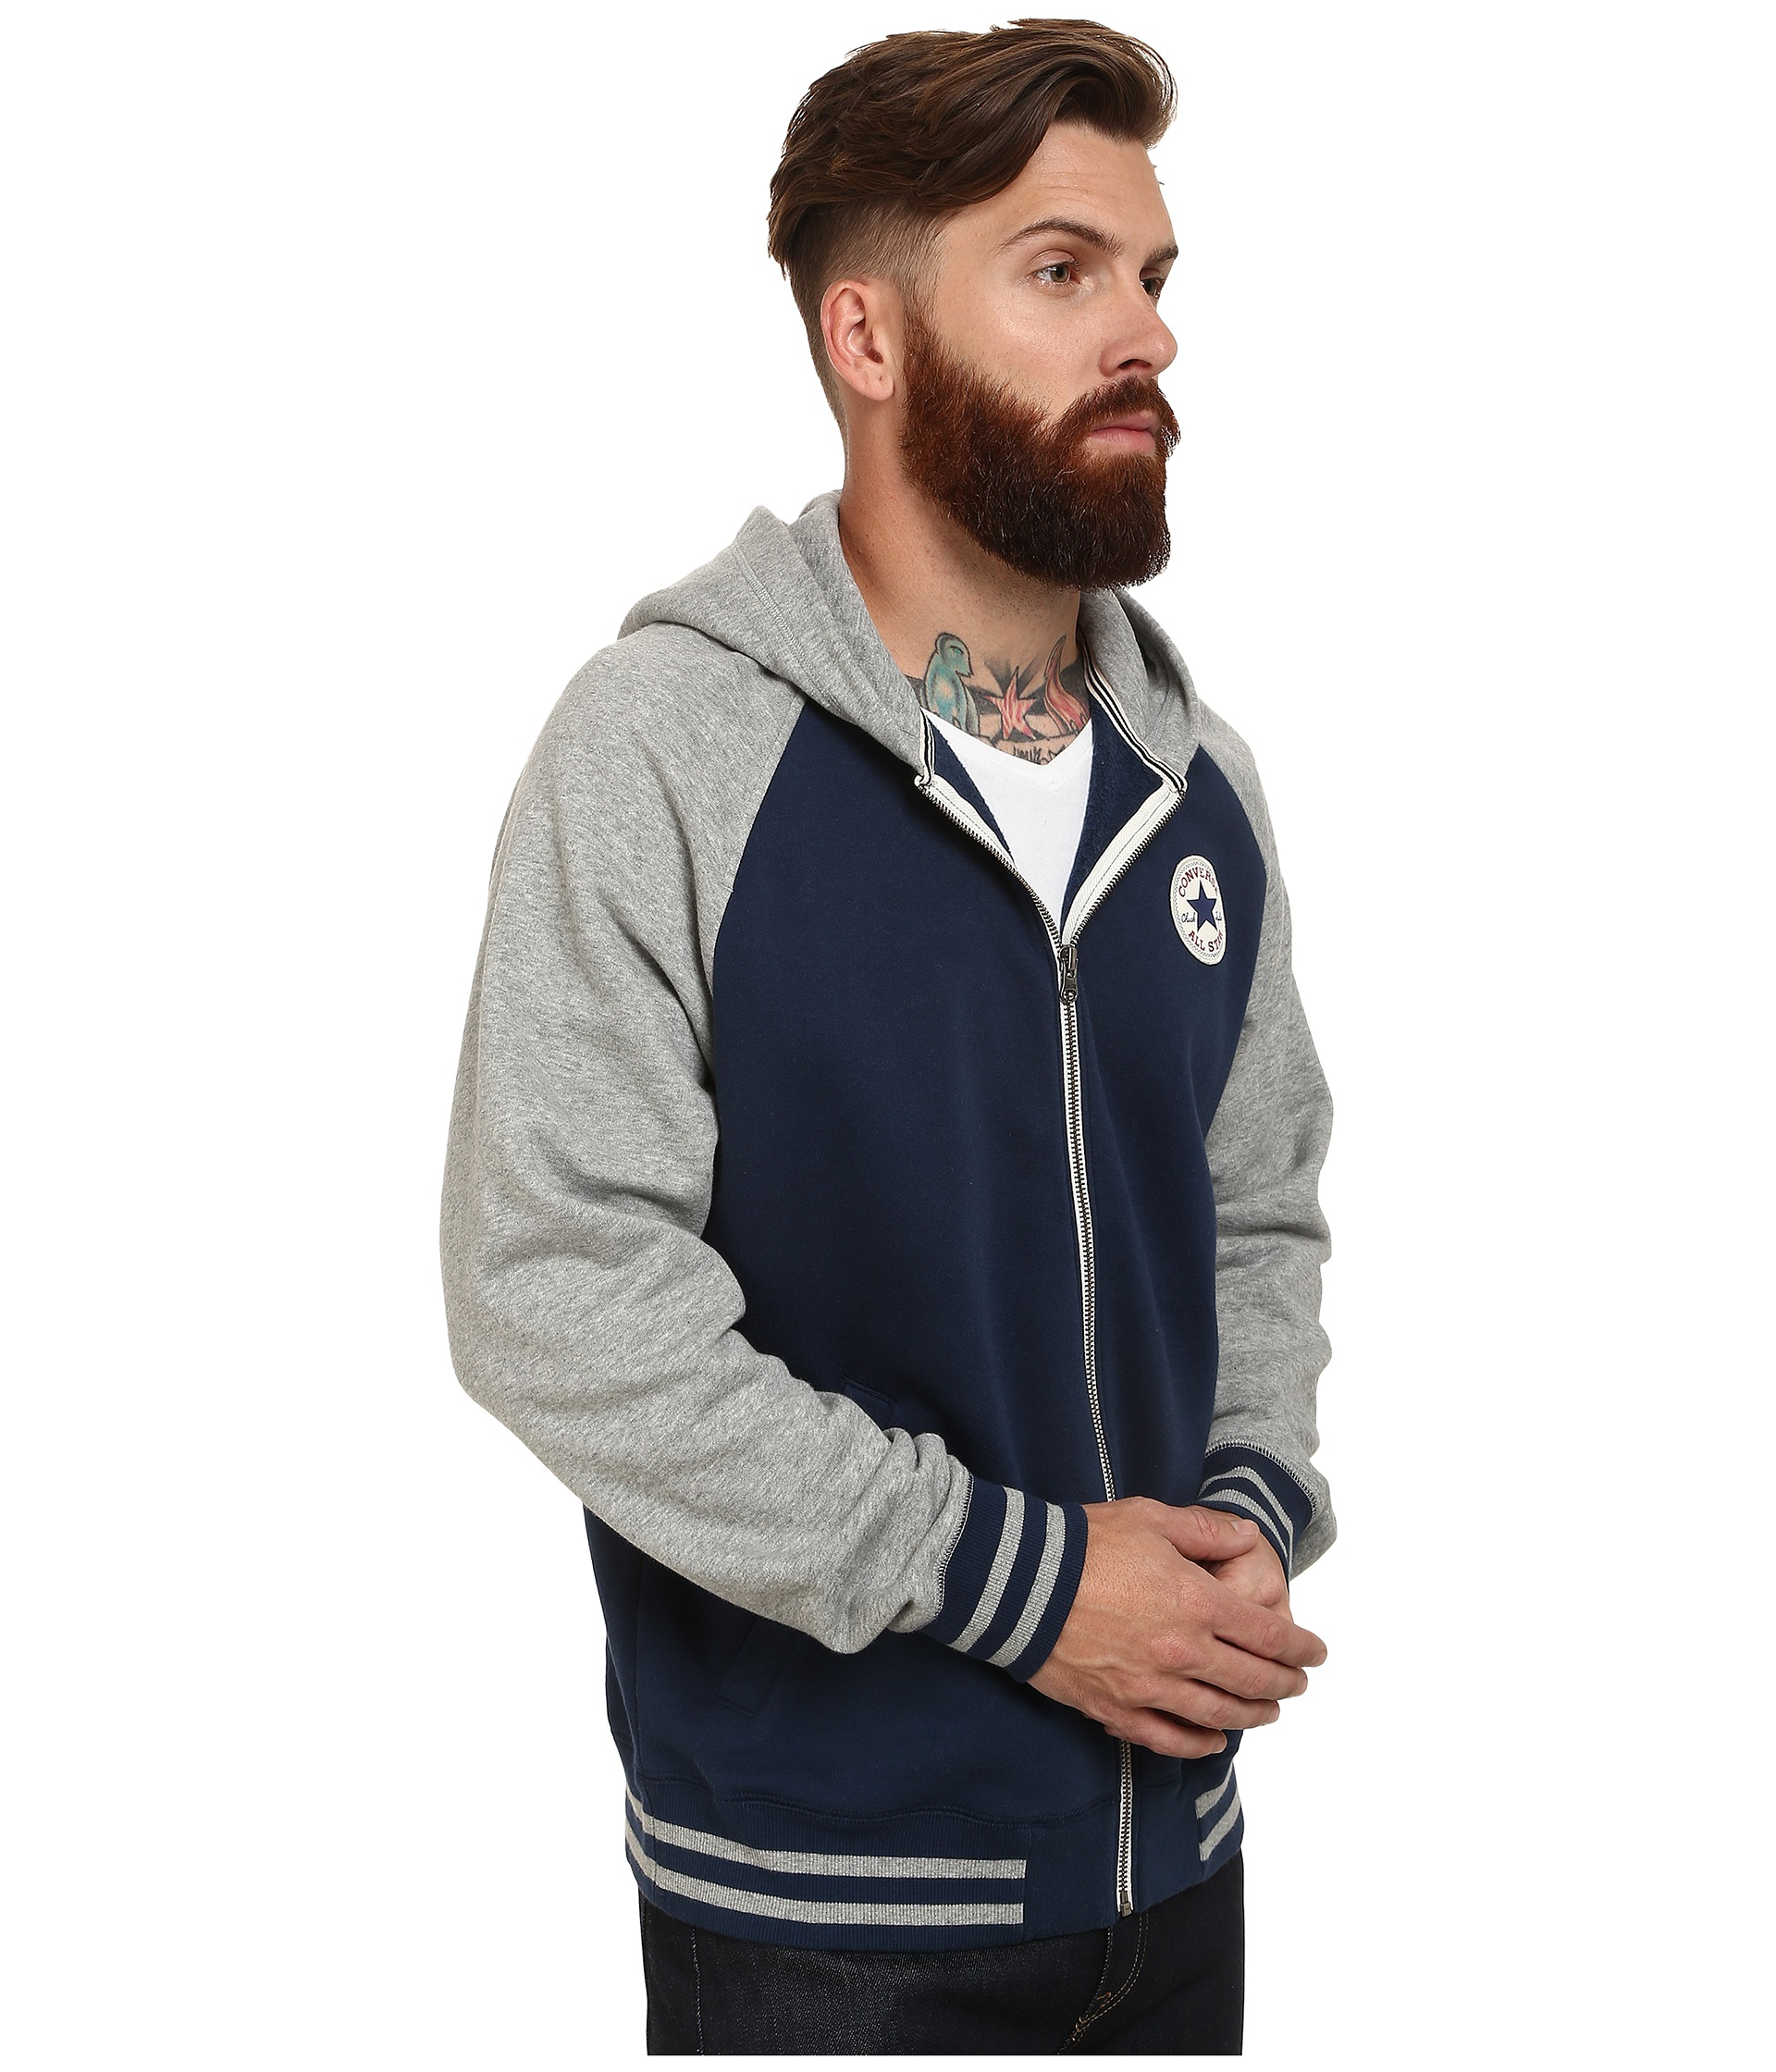 Converse Fleece Patch Hooded Baseball Jacket in Navy (Blue) for Men - Lyst